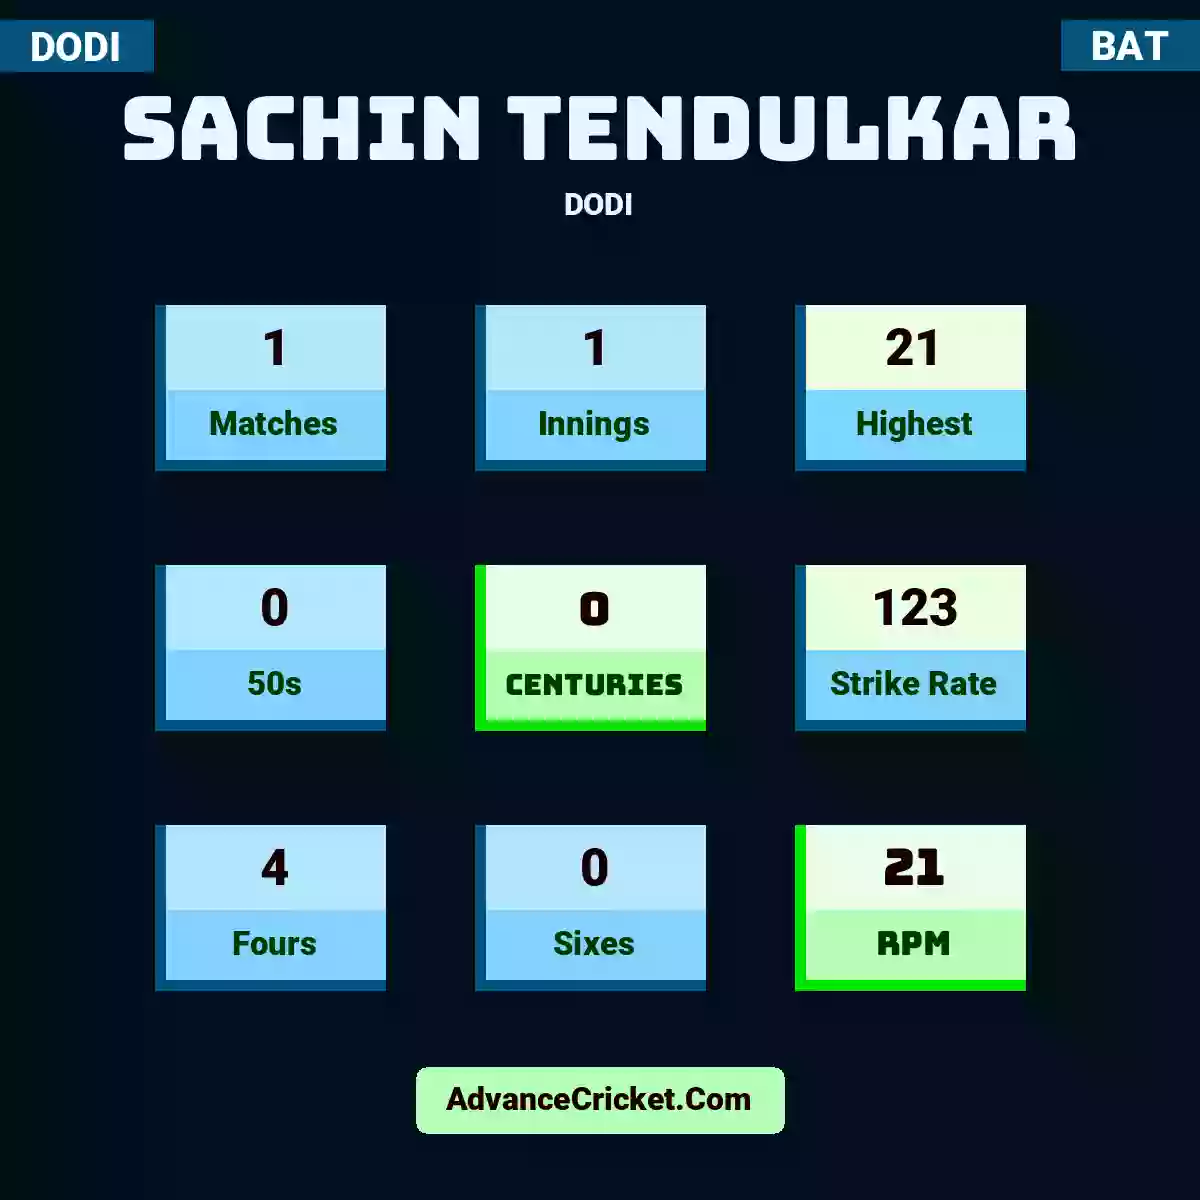 Sachin Tendulkar DODI , Sachin Tendulkar played 1 matches, scored 21 runs as highest, 0 half-centuries, and 0 centuries, with a strike rate of 123. S.Tendulkar hit 4 fours and 0 sixes, with an RPM of 21.